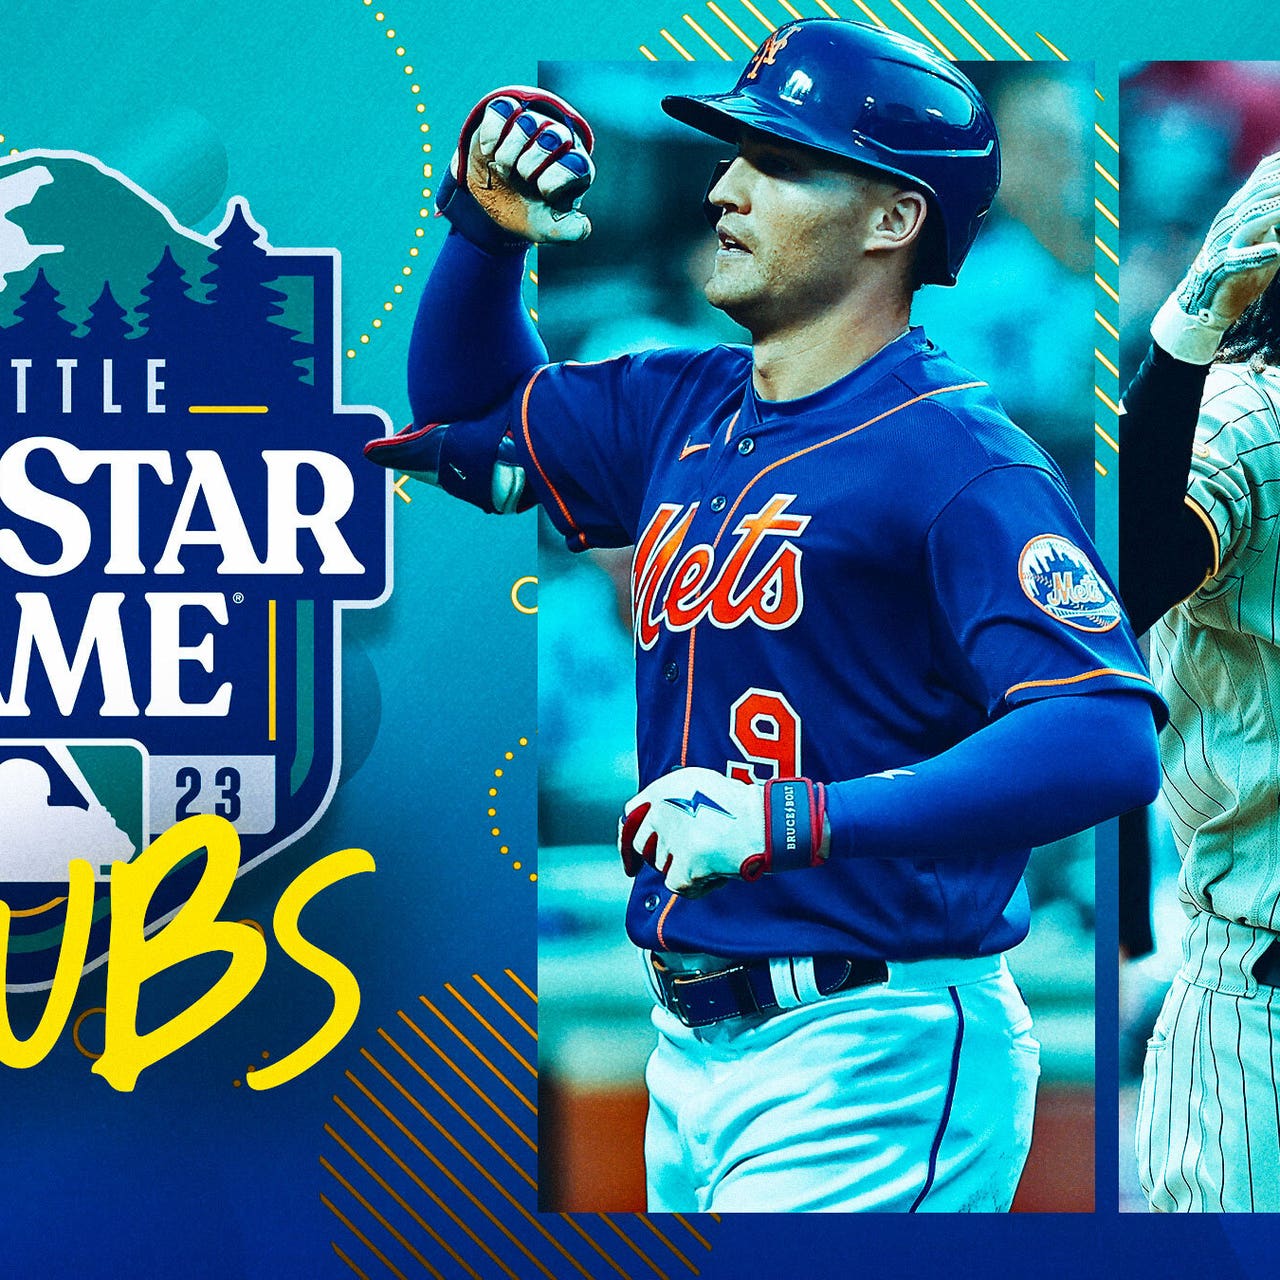 2023 MLB All-Star Game Day Program